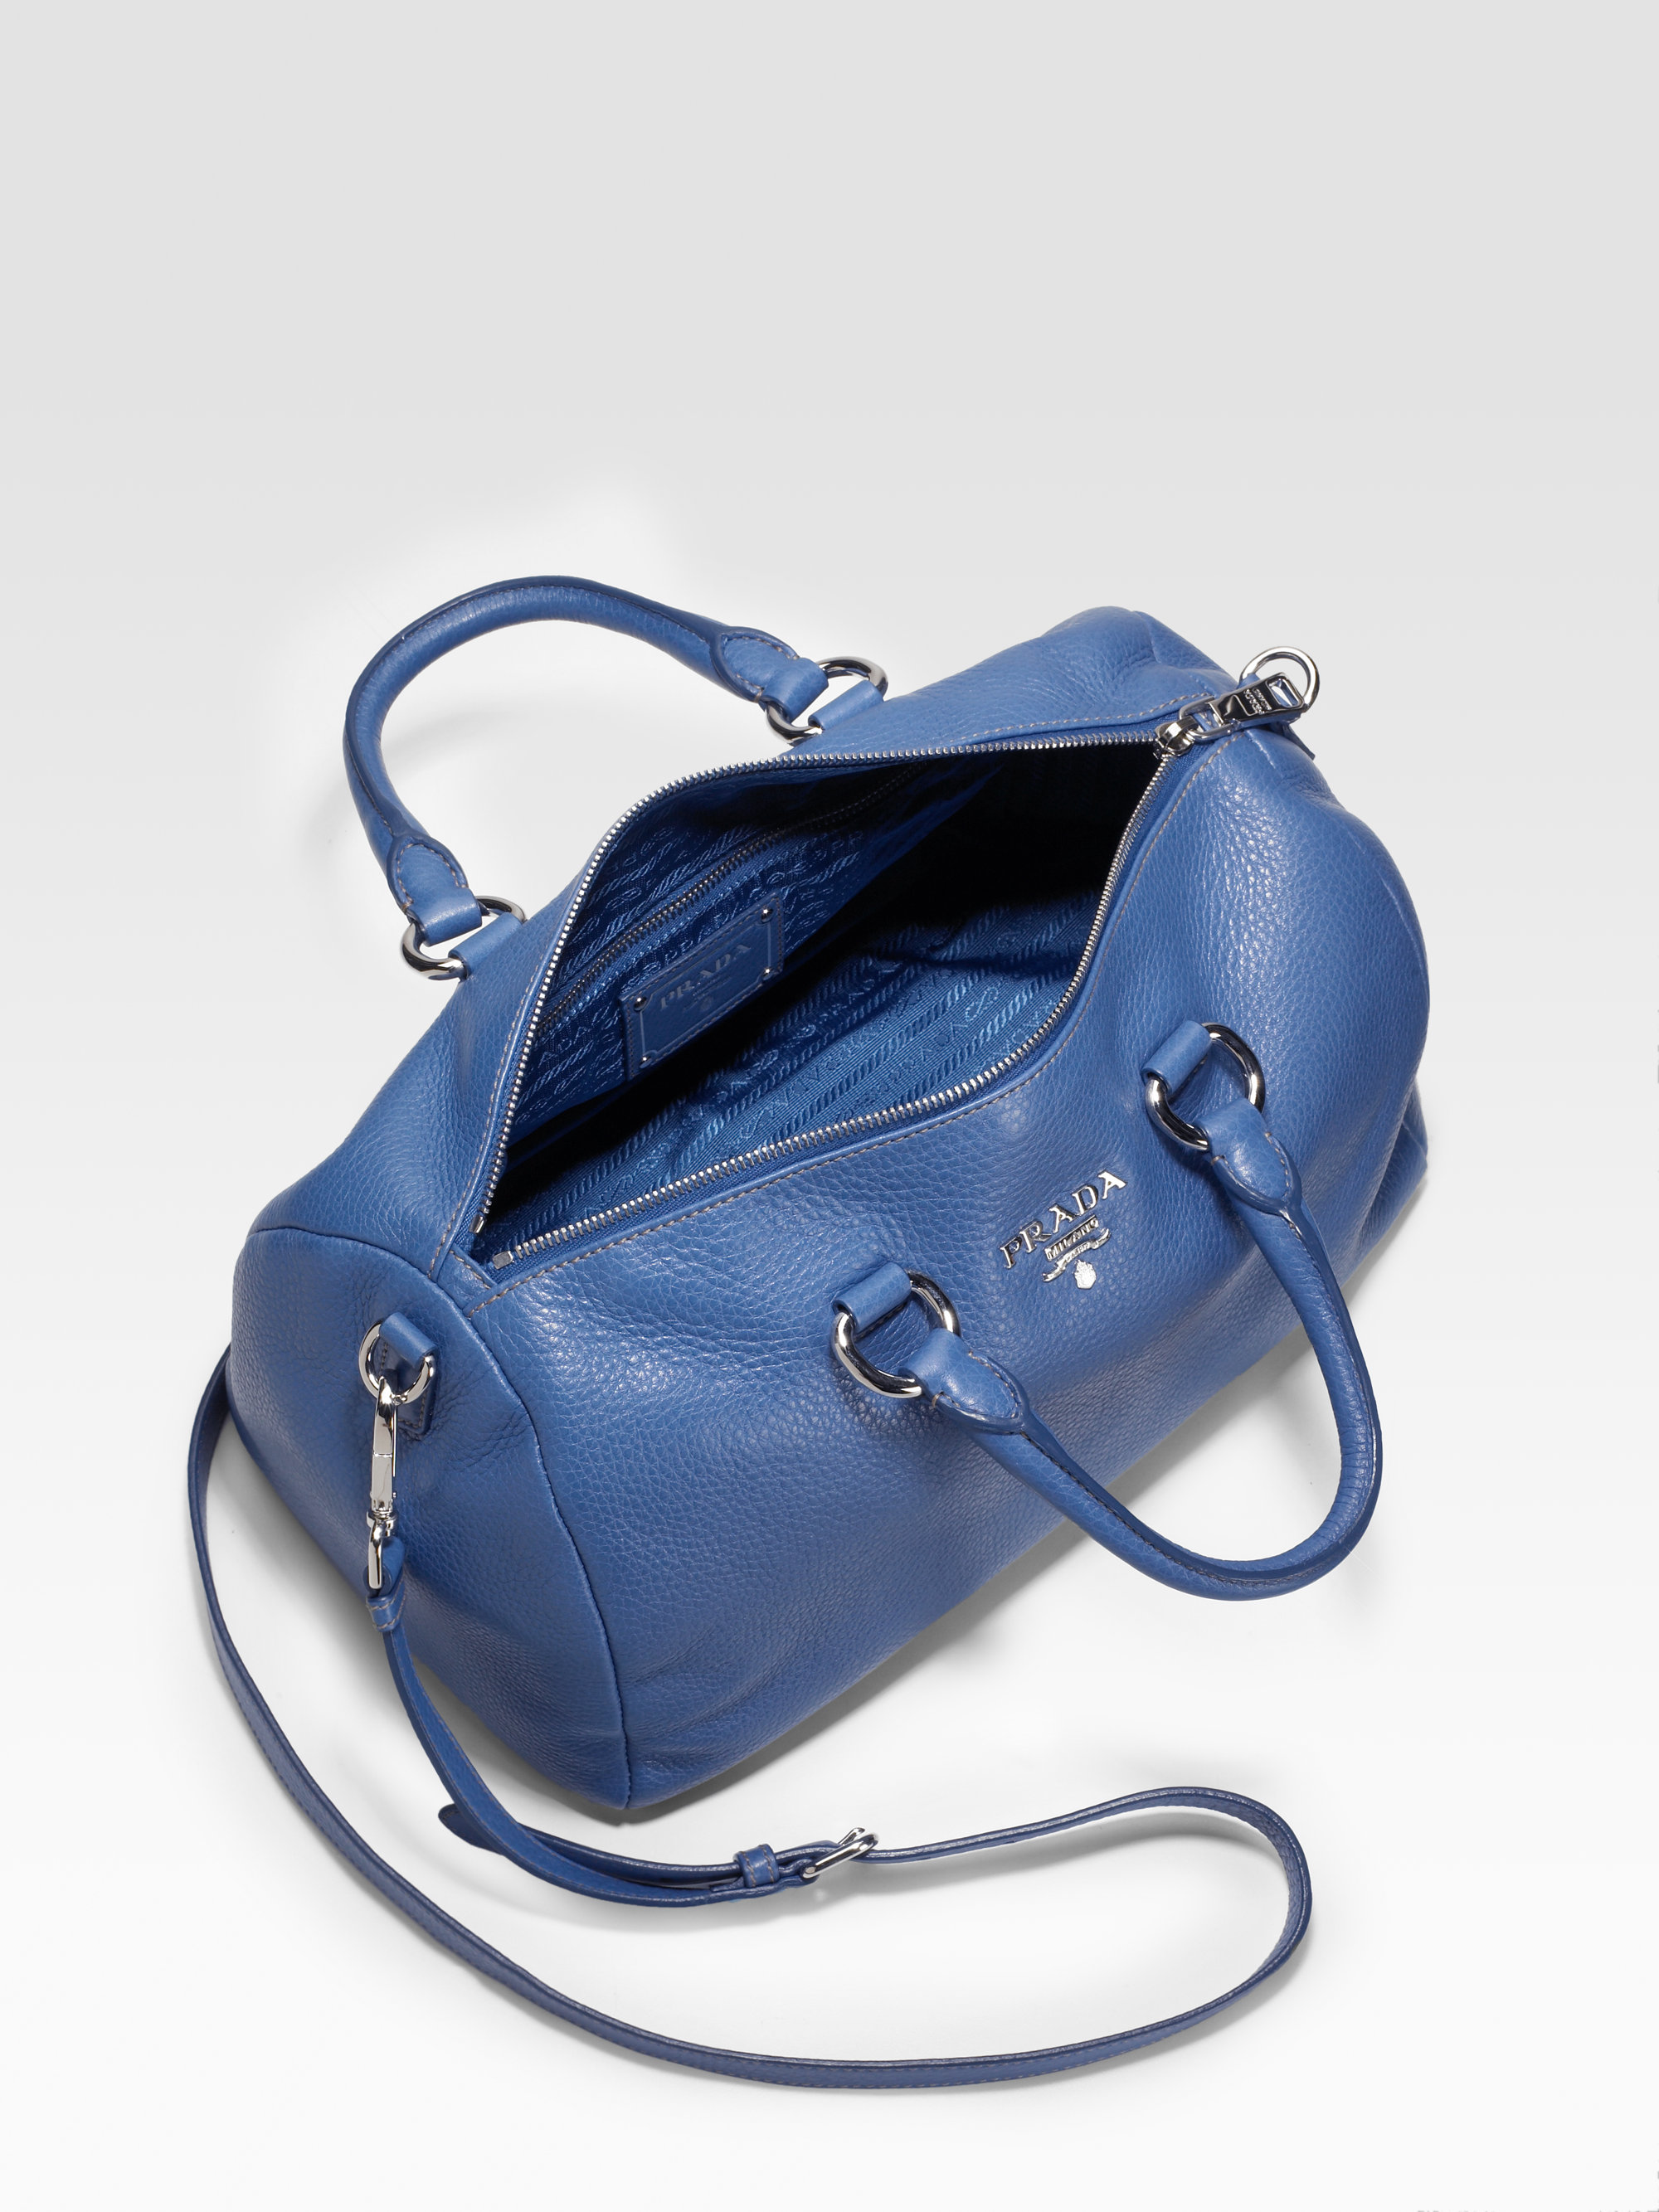 celini bags - prada leather satchel